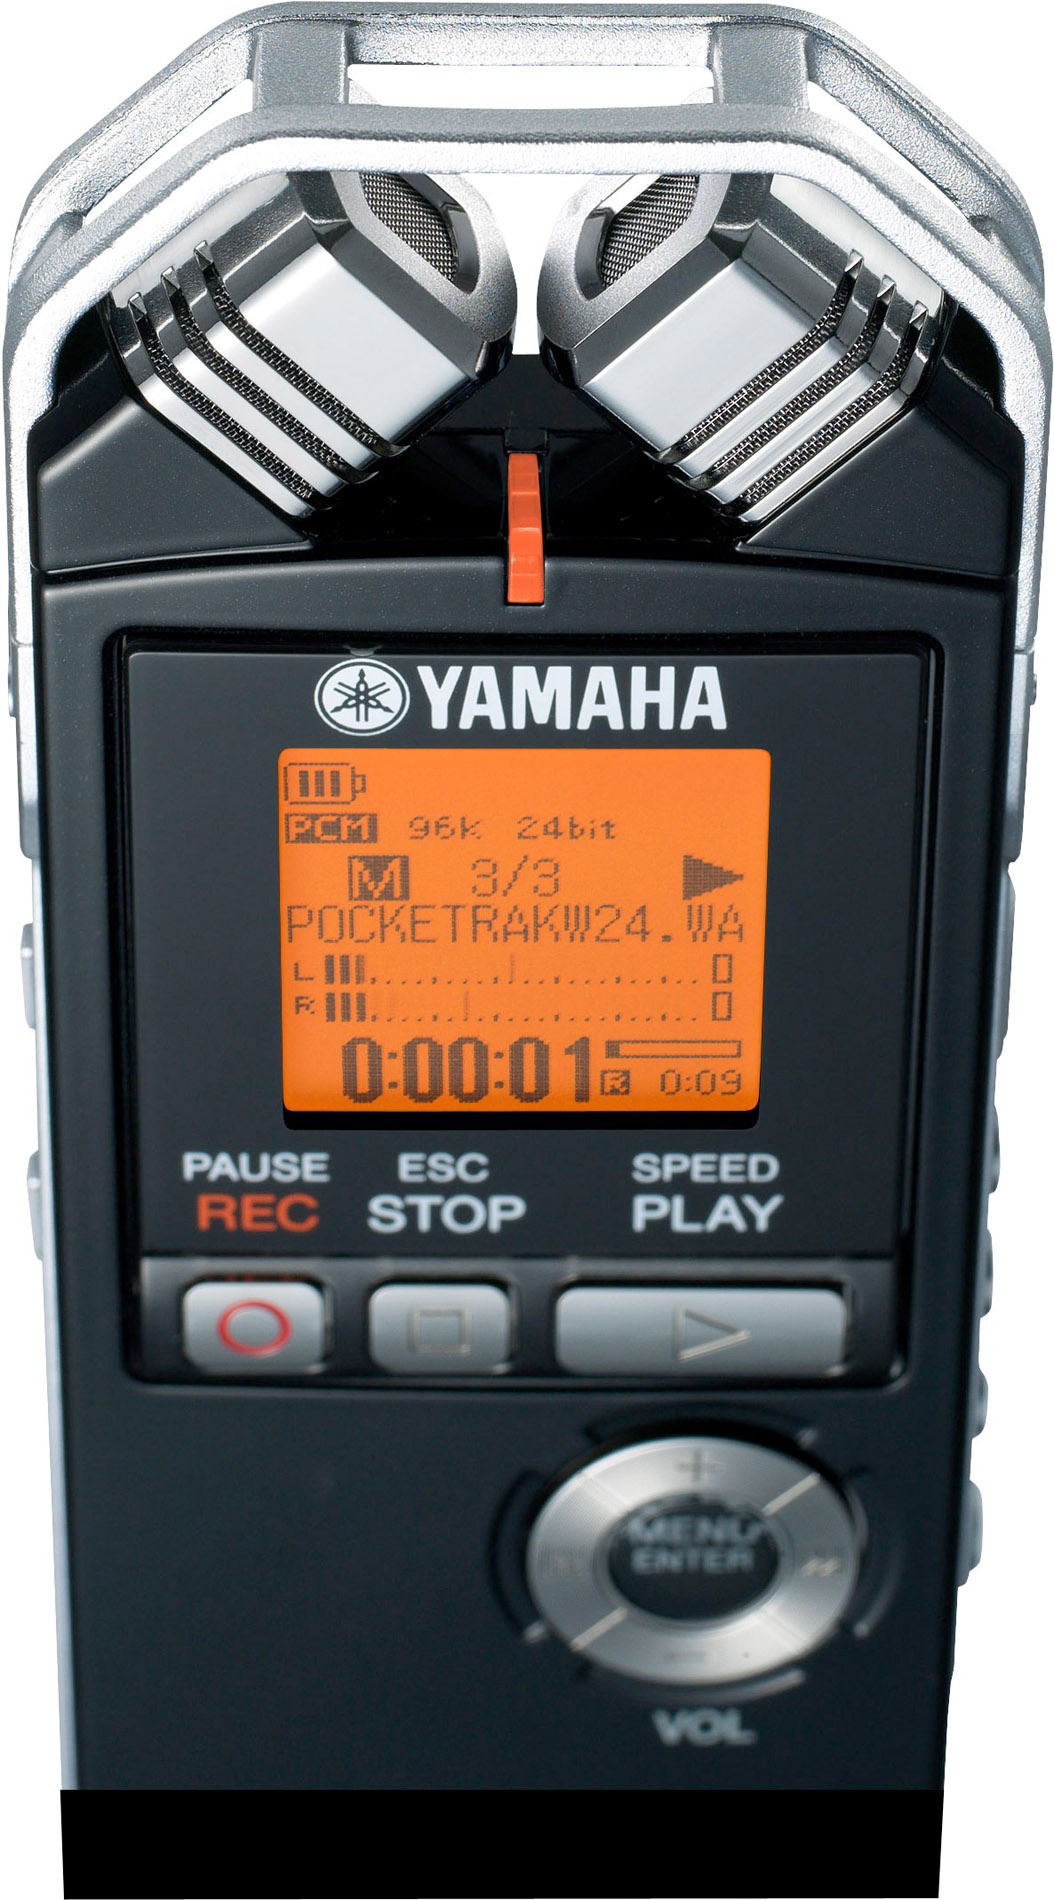 Yamaha Pocketrak W24